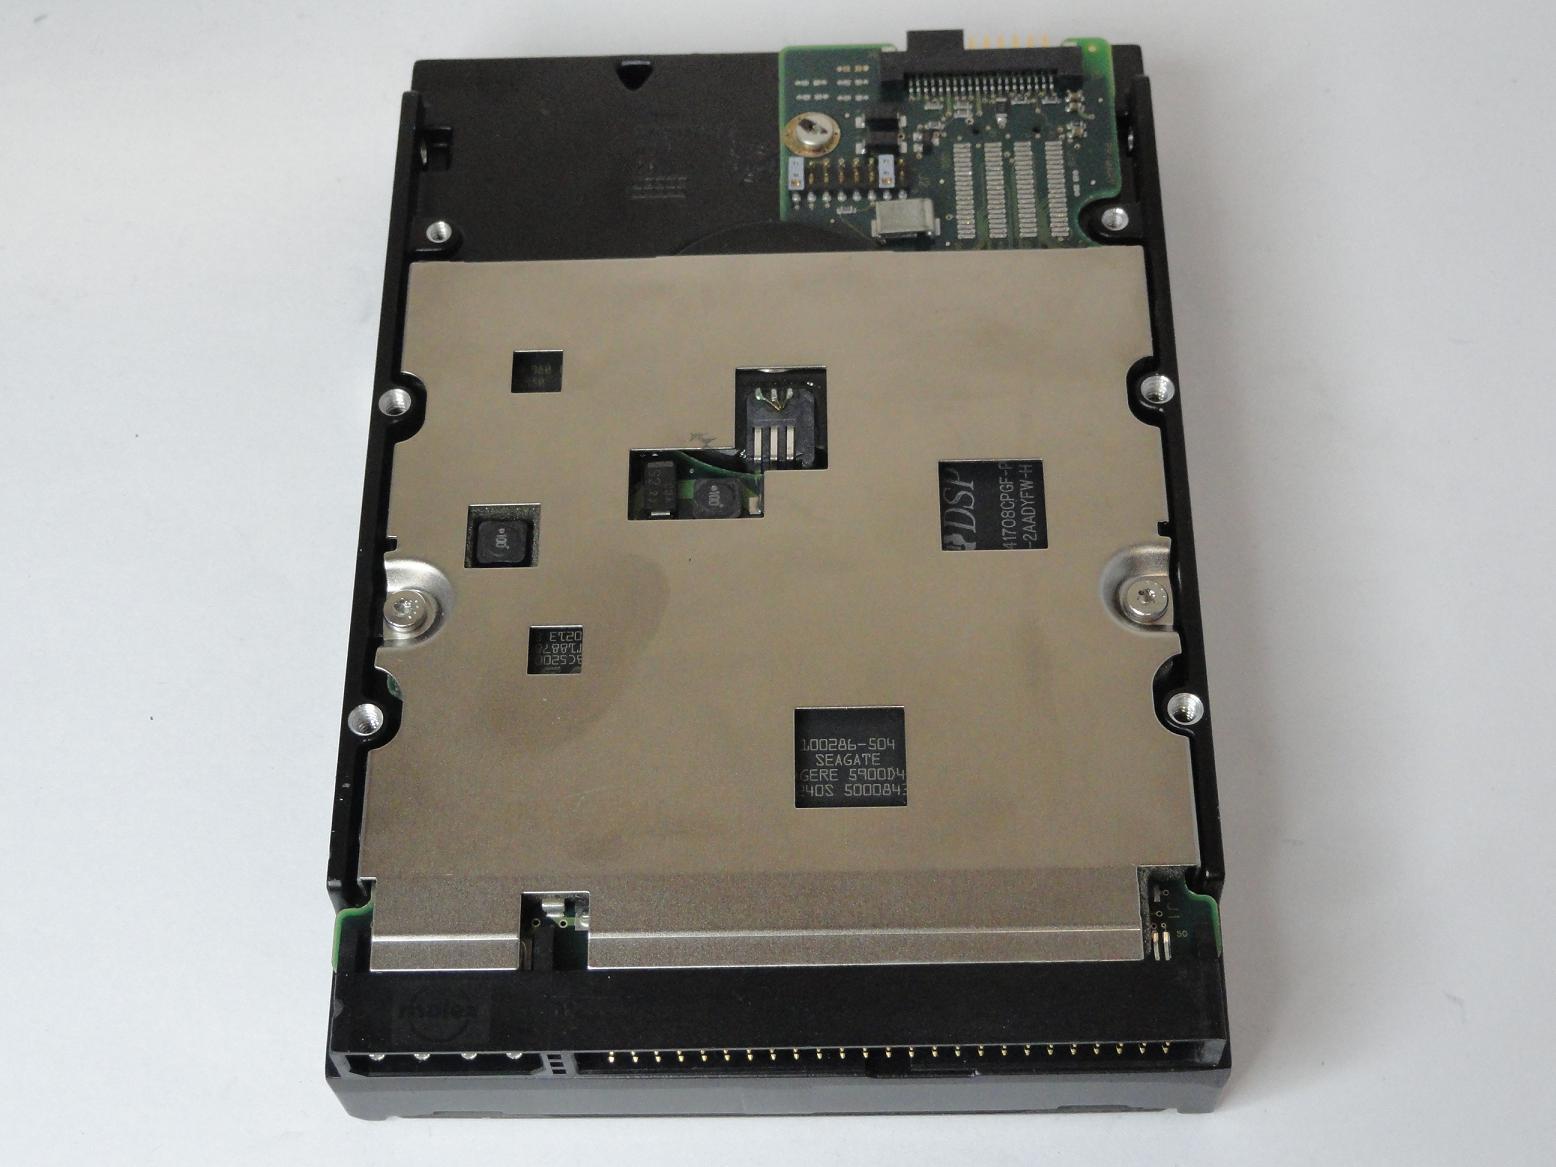 MC6326_9W8004-001_Seagate 18GB SCSI 50 Pin 7200rpm 3.5in Recert HDD - Image2